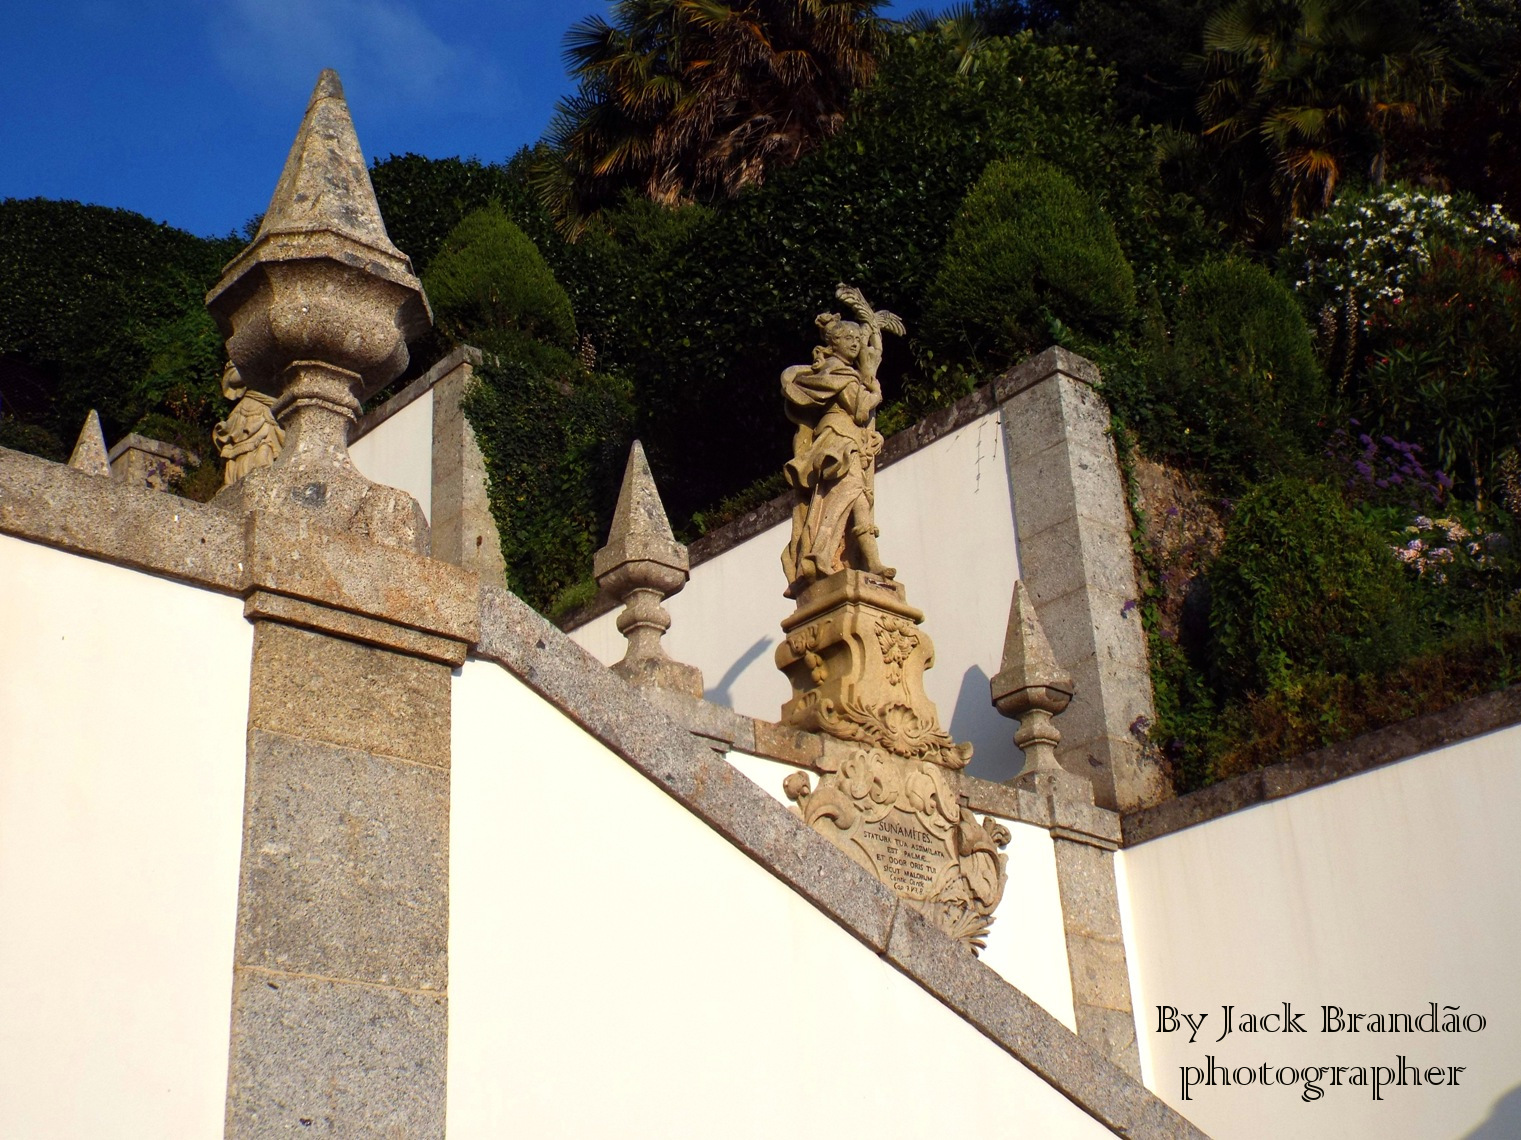  Braga, Portugal, Bom Jesus do Monte, ; Jack Brandão; photographer, writer, photos for sale, jackbran